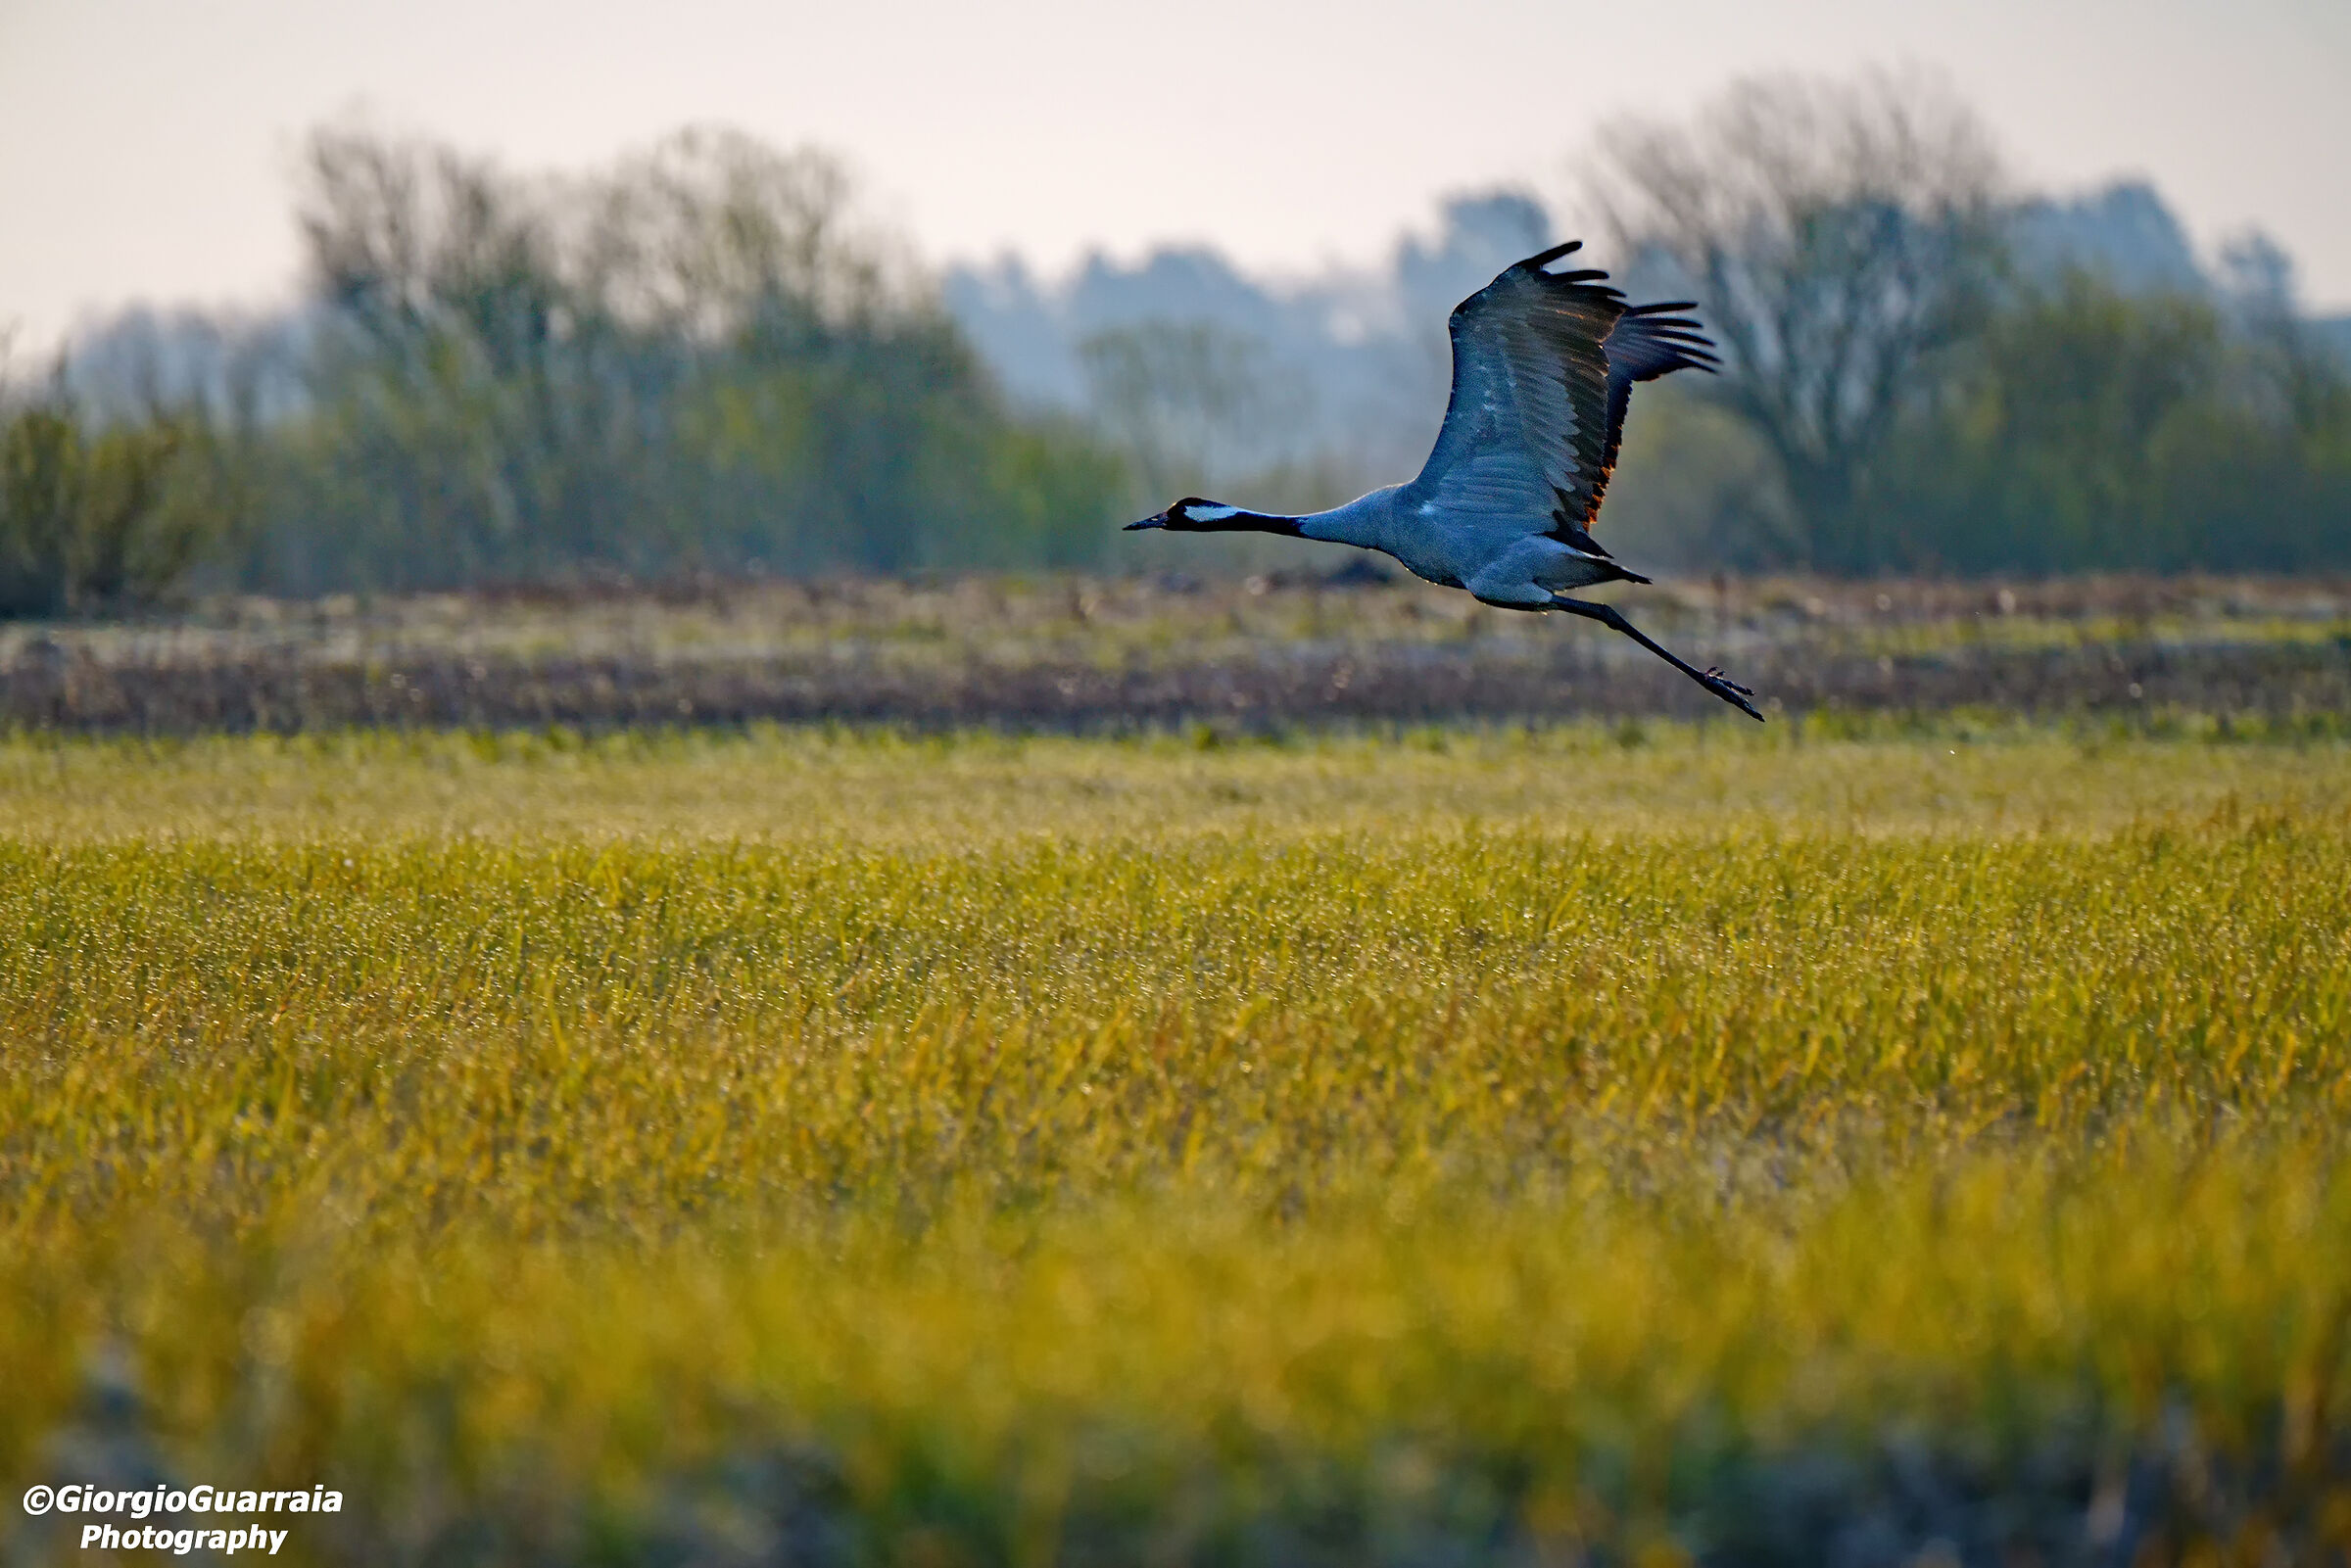 Cranes in flight...